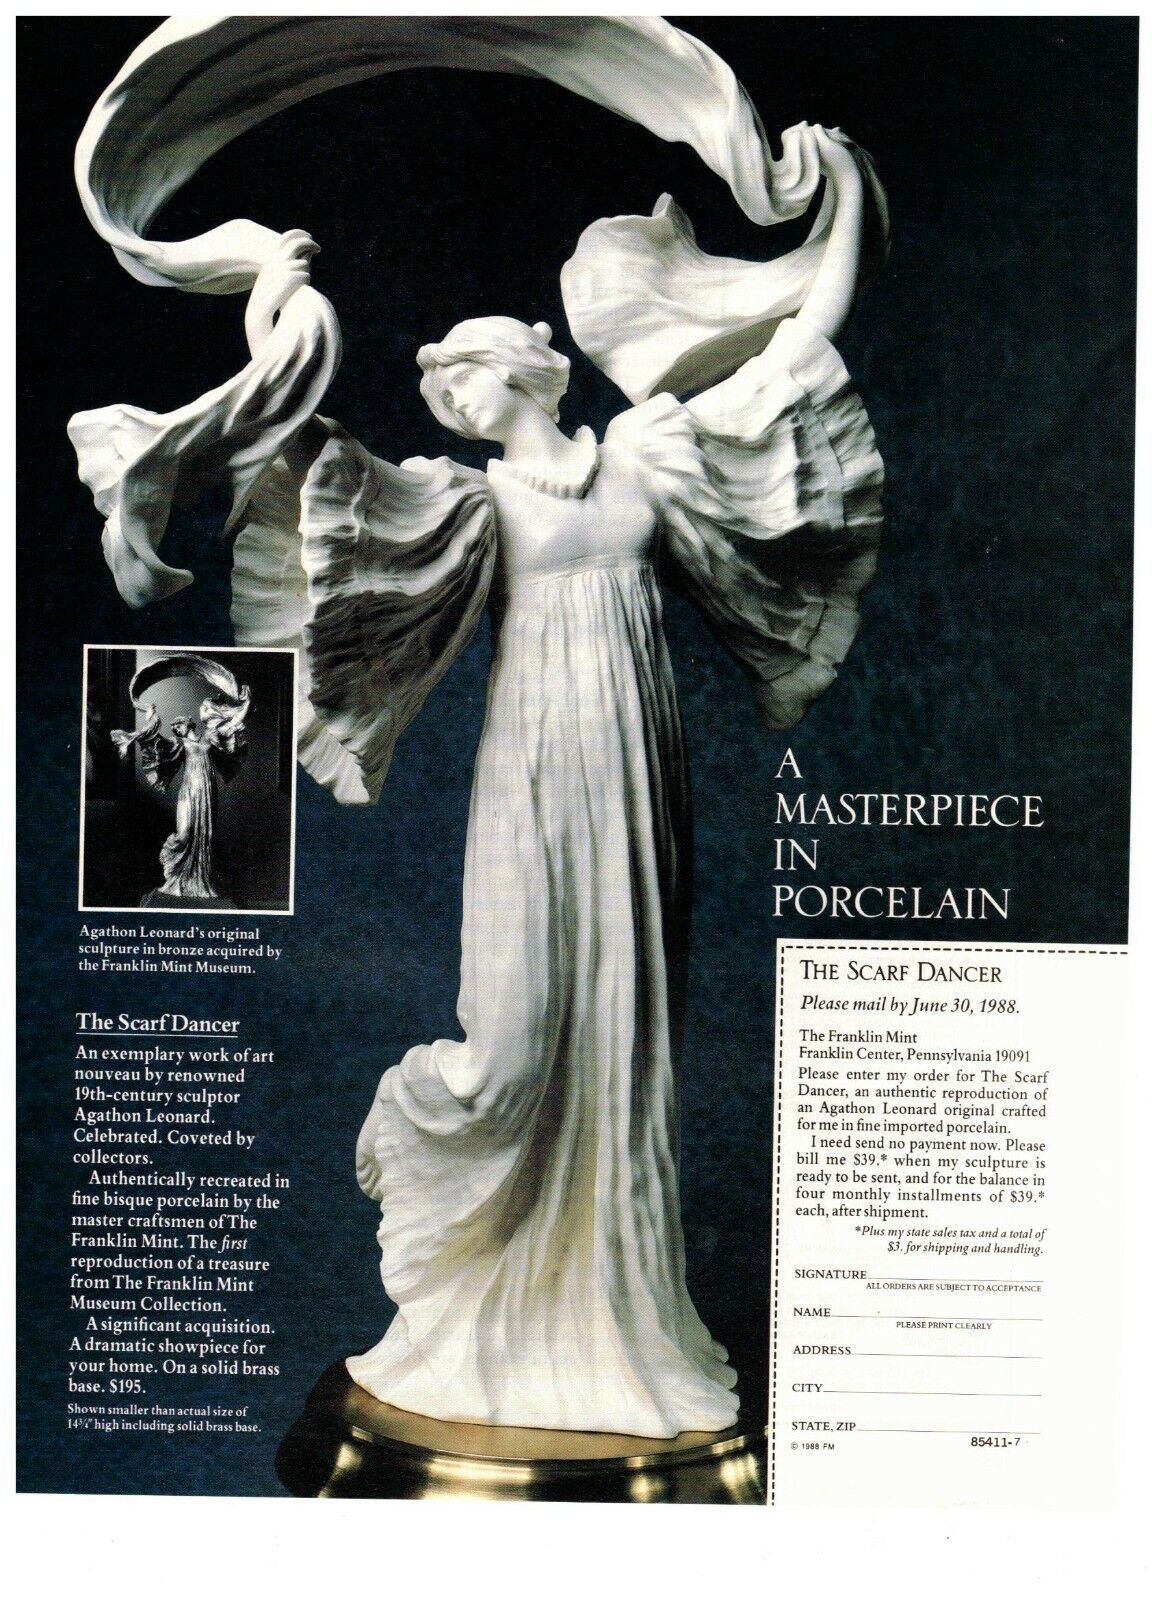 1989 Franklin Mint Scarf Dancer Porcelain Sculpture Vintage Print Advertisement